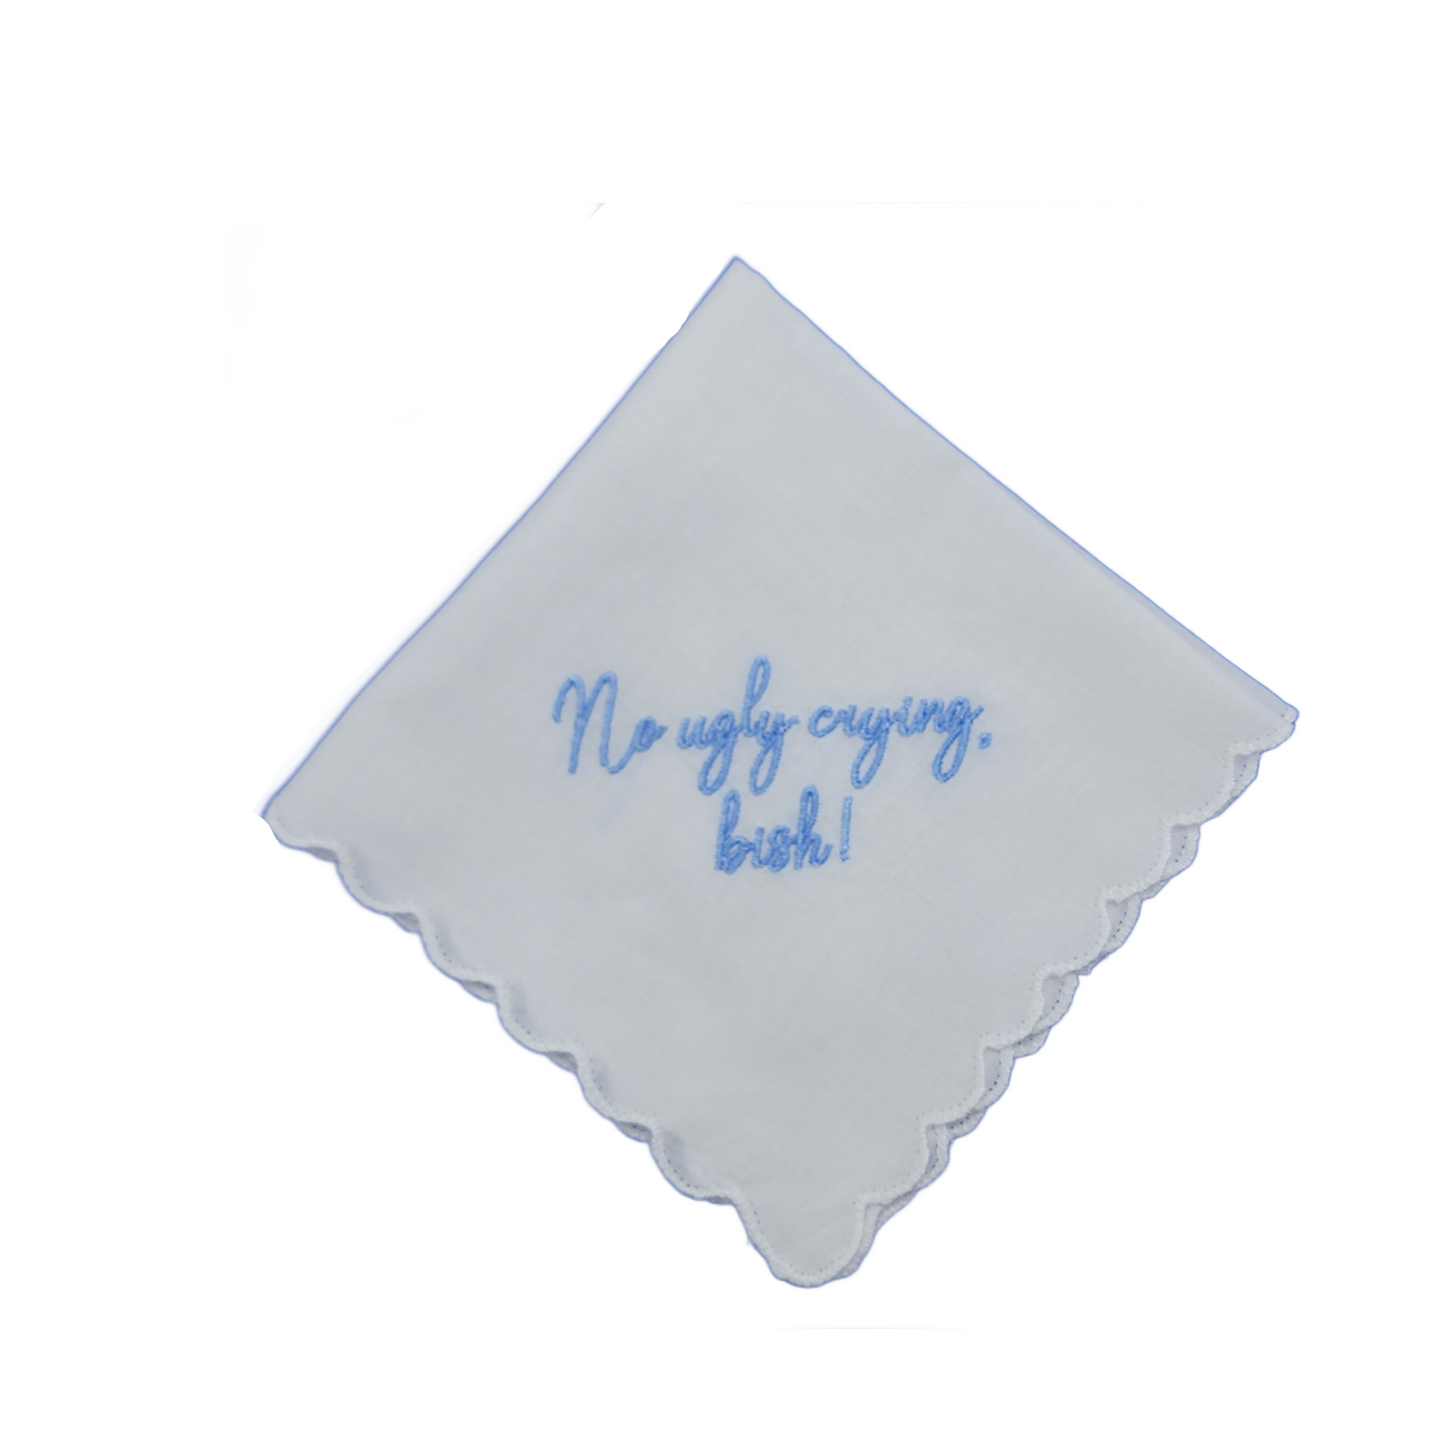 Square Scalloped Edge Handkerchief - No Ugly Crying, Bish!